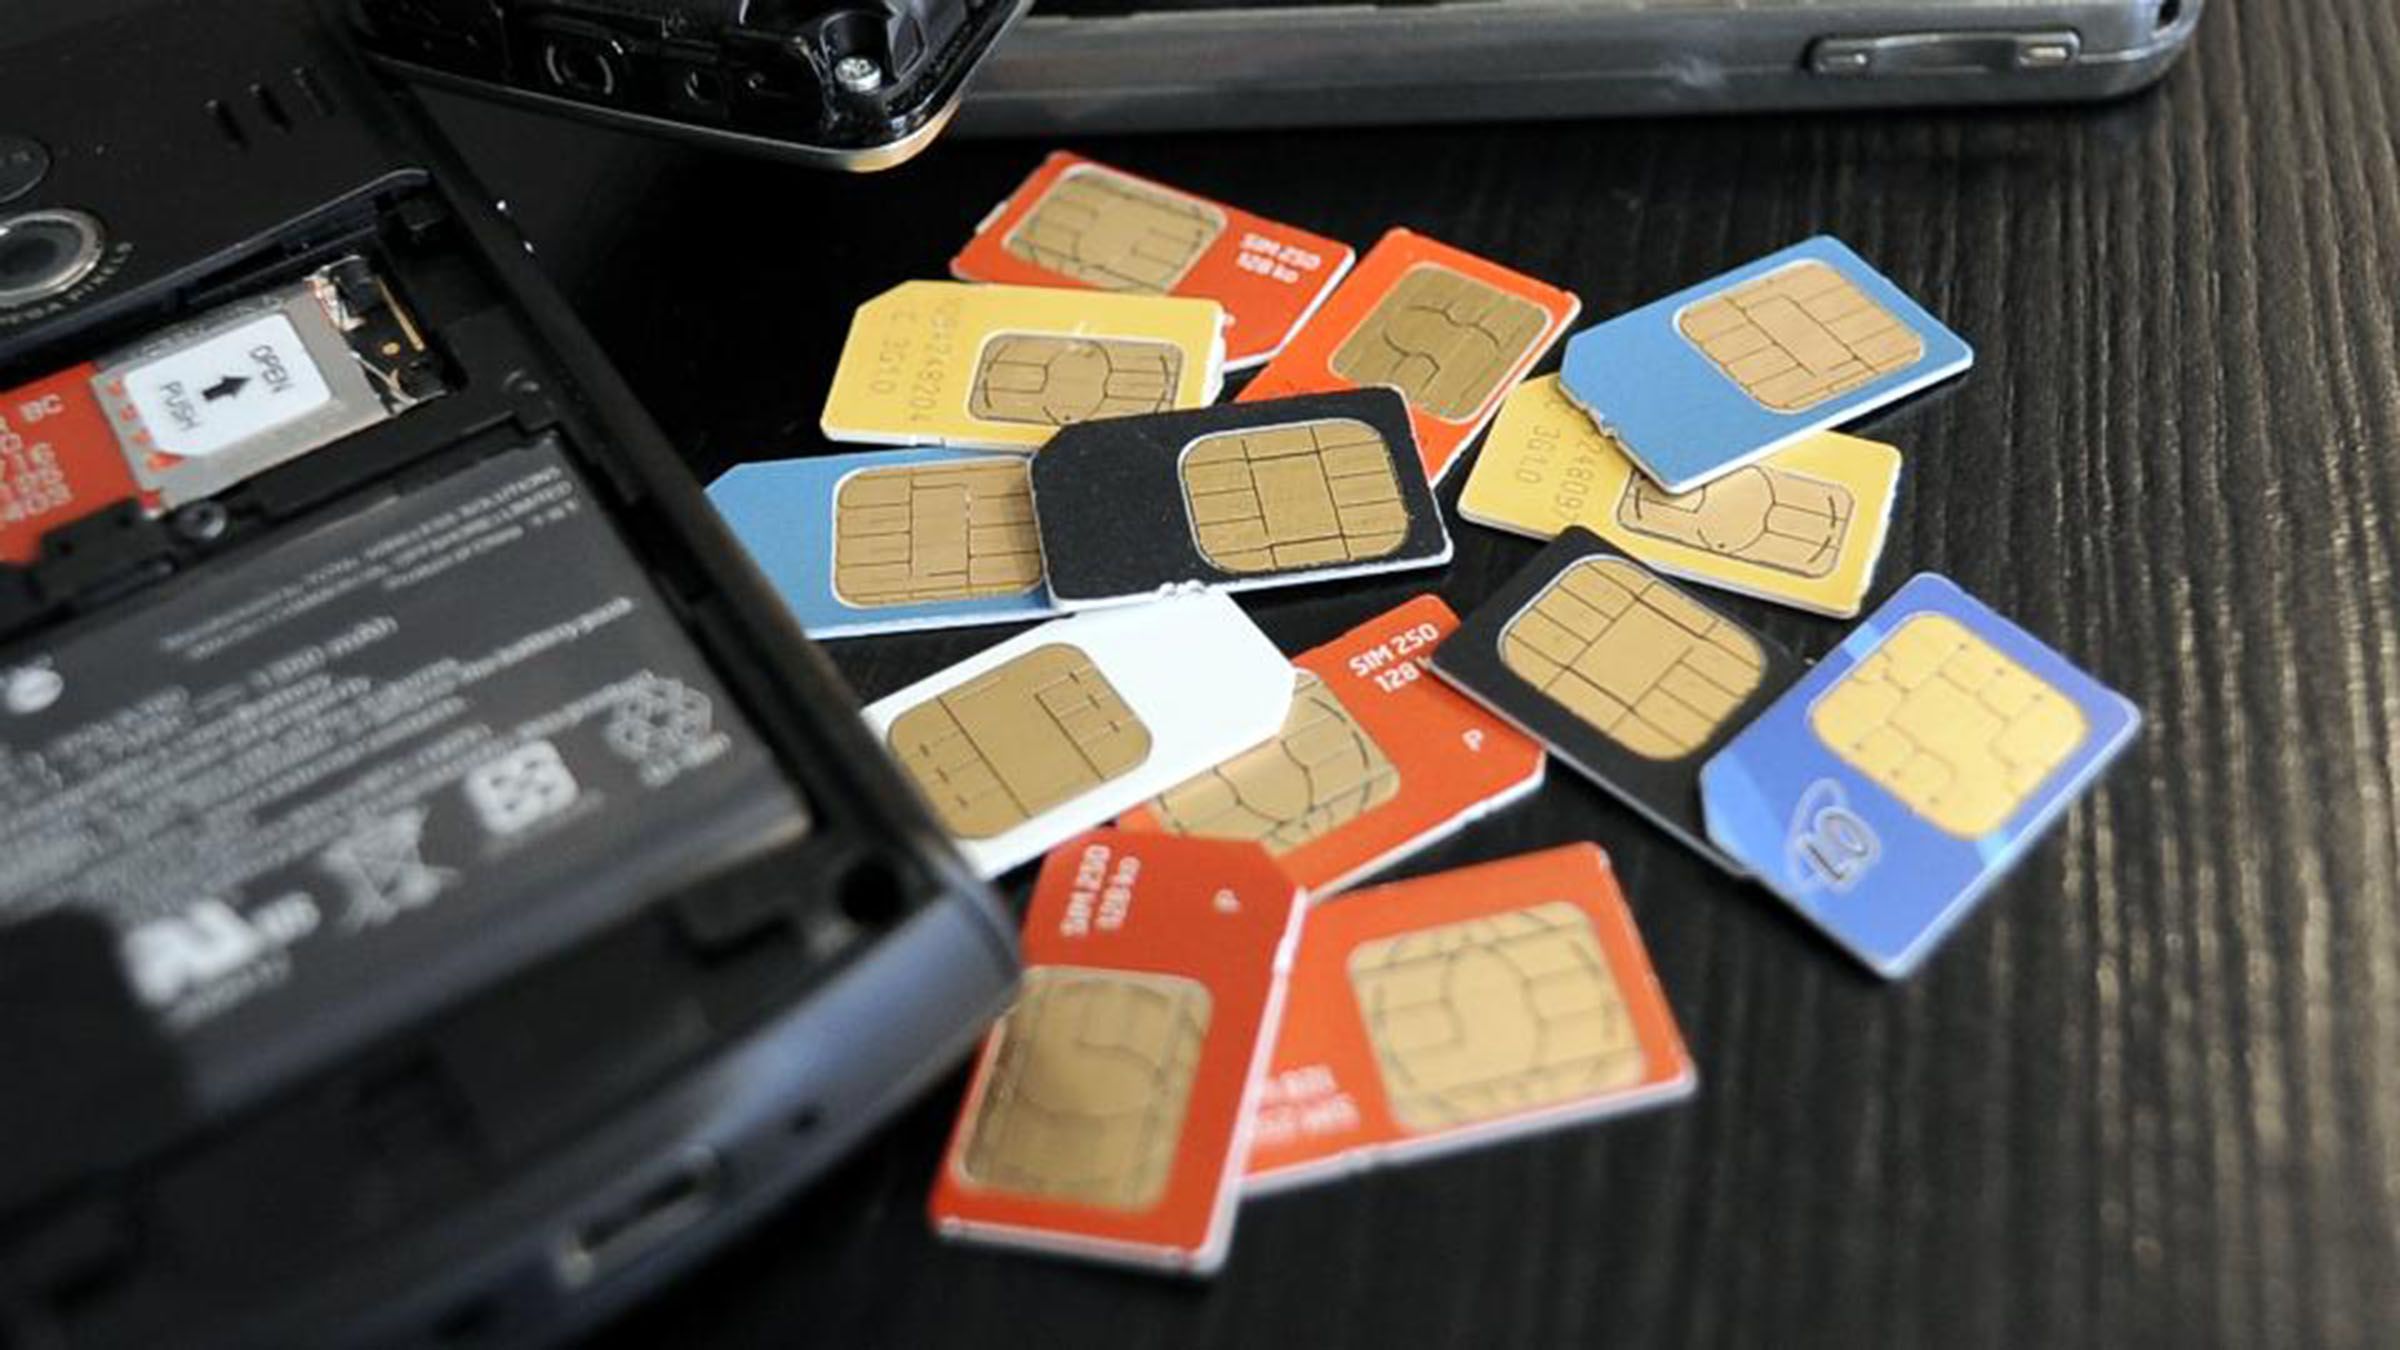 Beware of phishers in SIM card registration